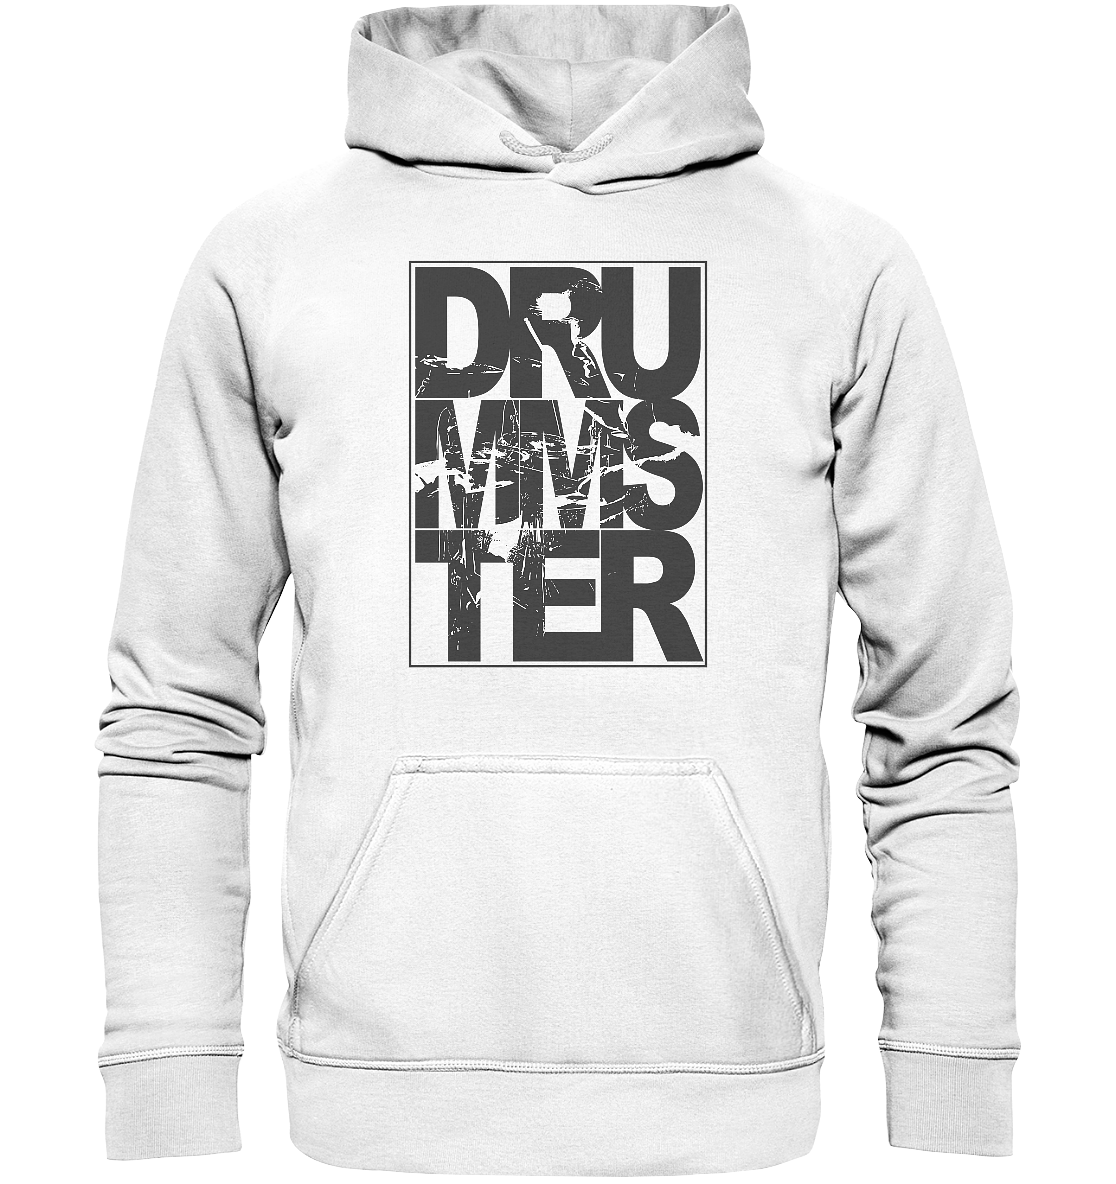 art of drummster v3 - unisex hoodie | arctic white